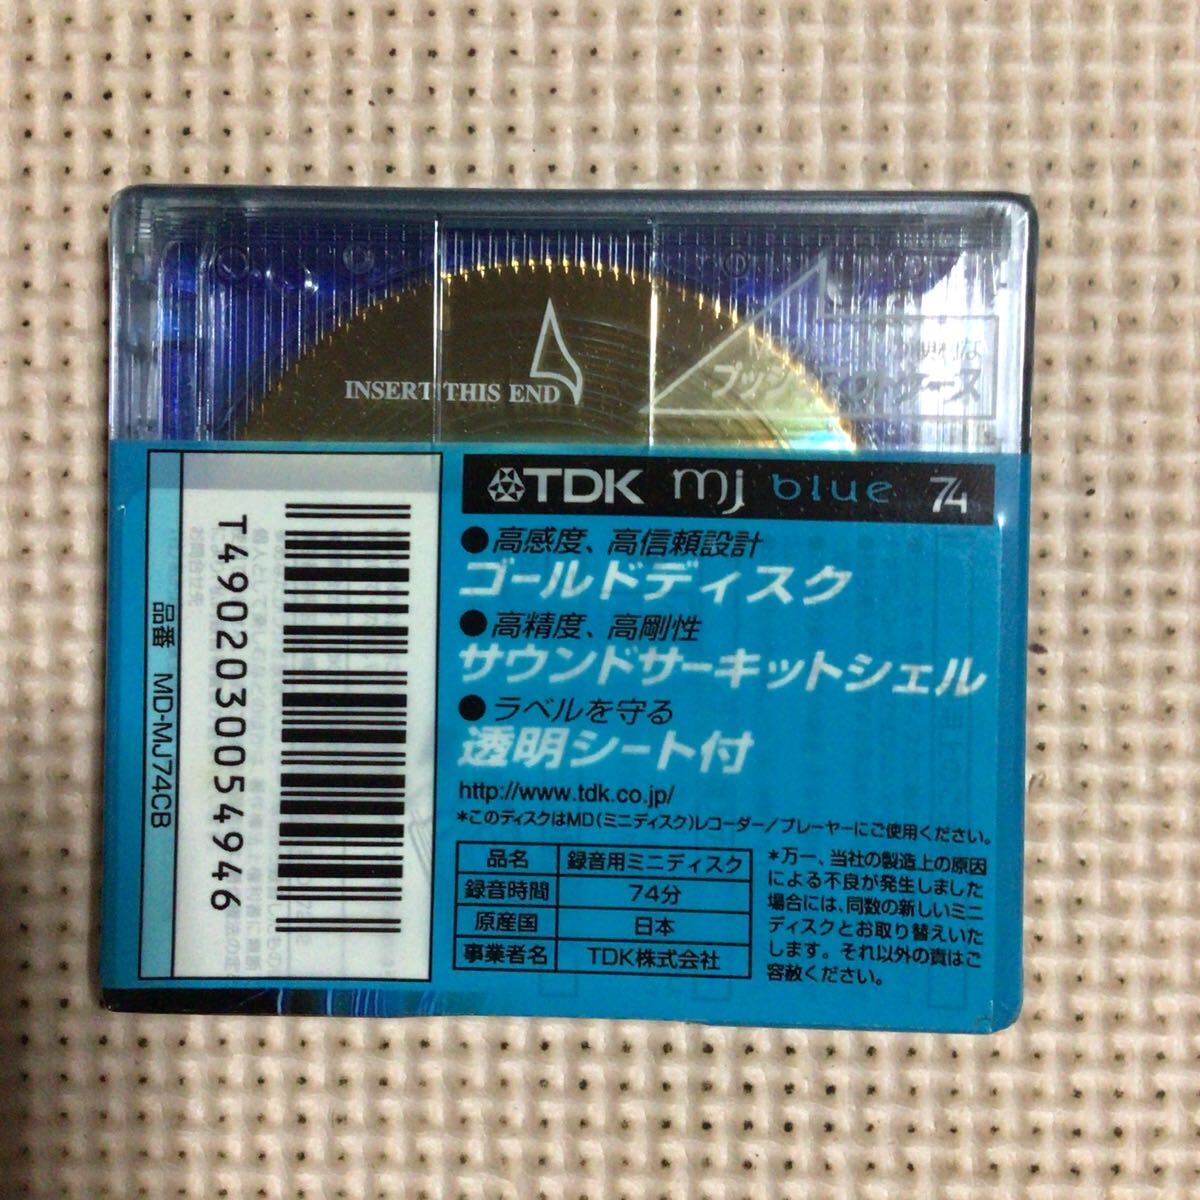 TDK MJ 74【music jack color】BLUE MD【mini disc】3枚セット【未開封新品】★_画像2